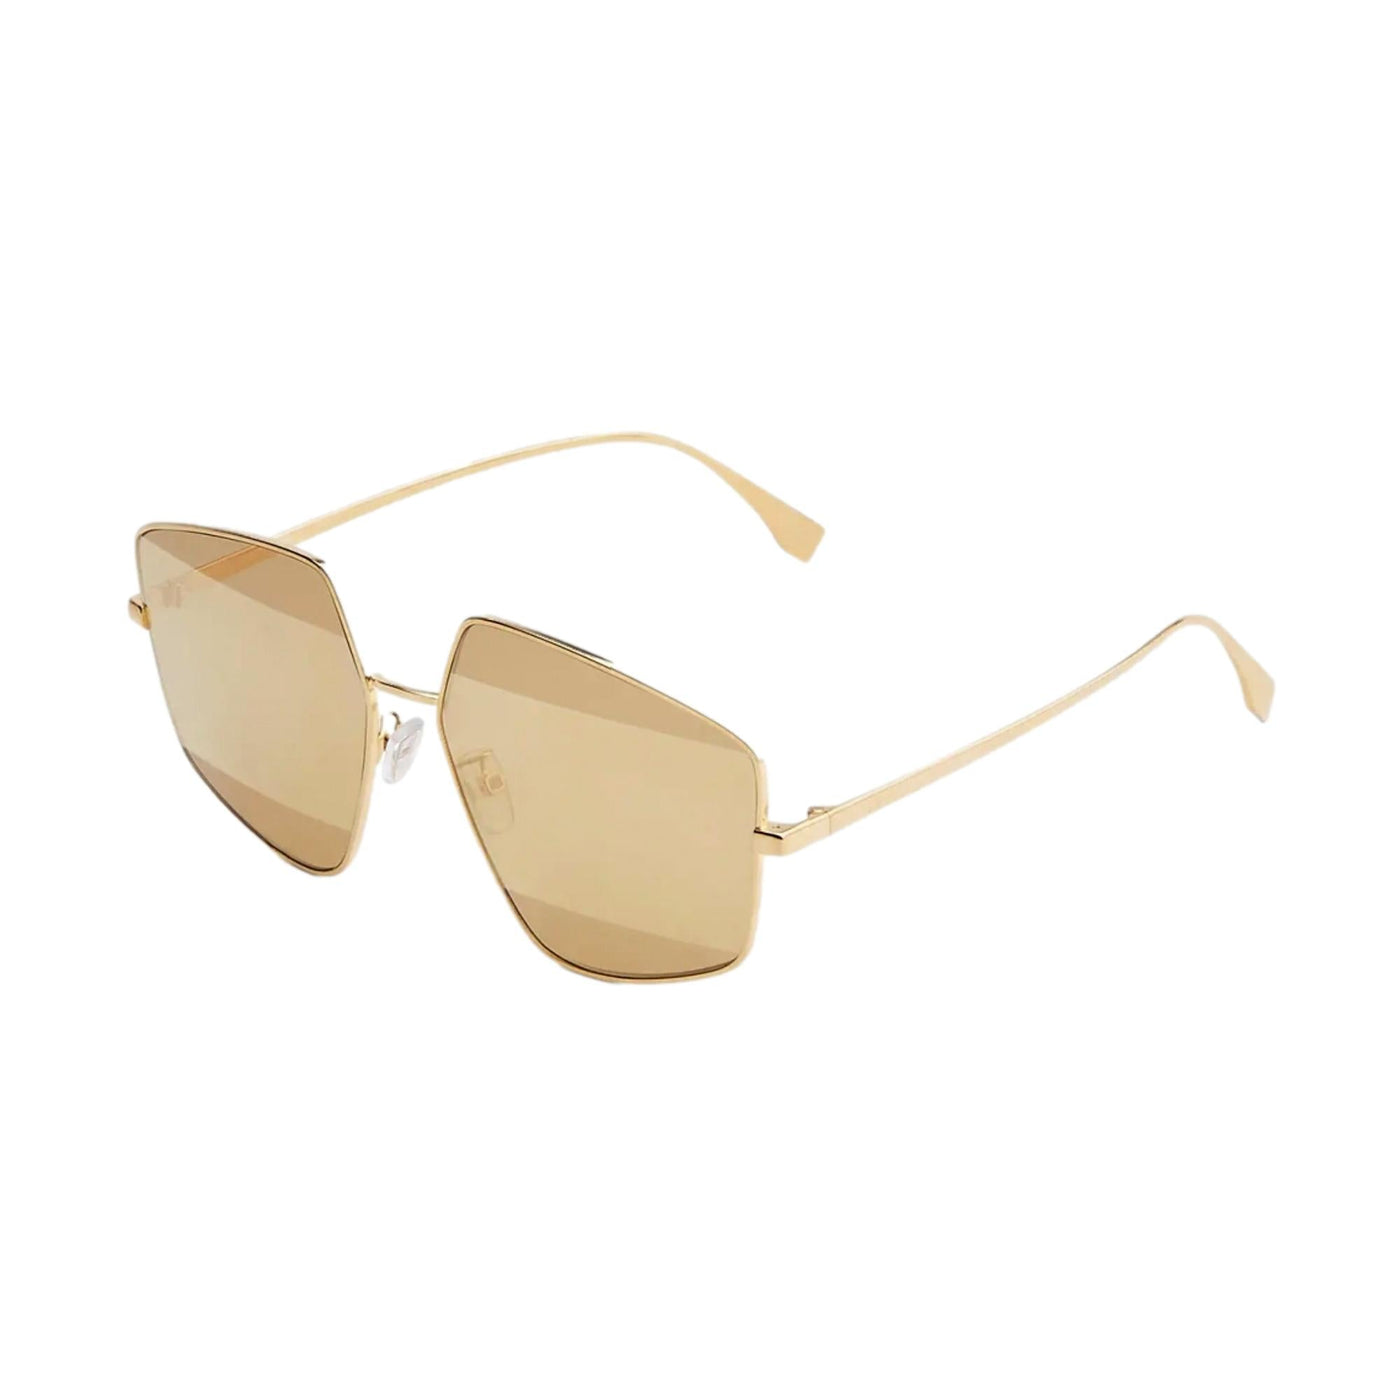 Fendi Stripes Gold Tint and Frame Metal Sunglasses - LUXURYMRKT